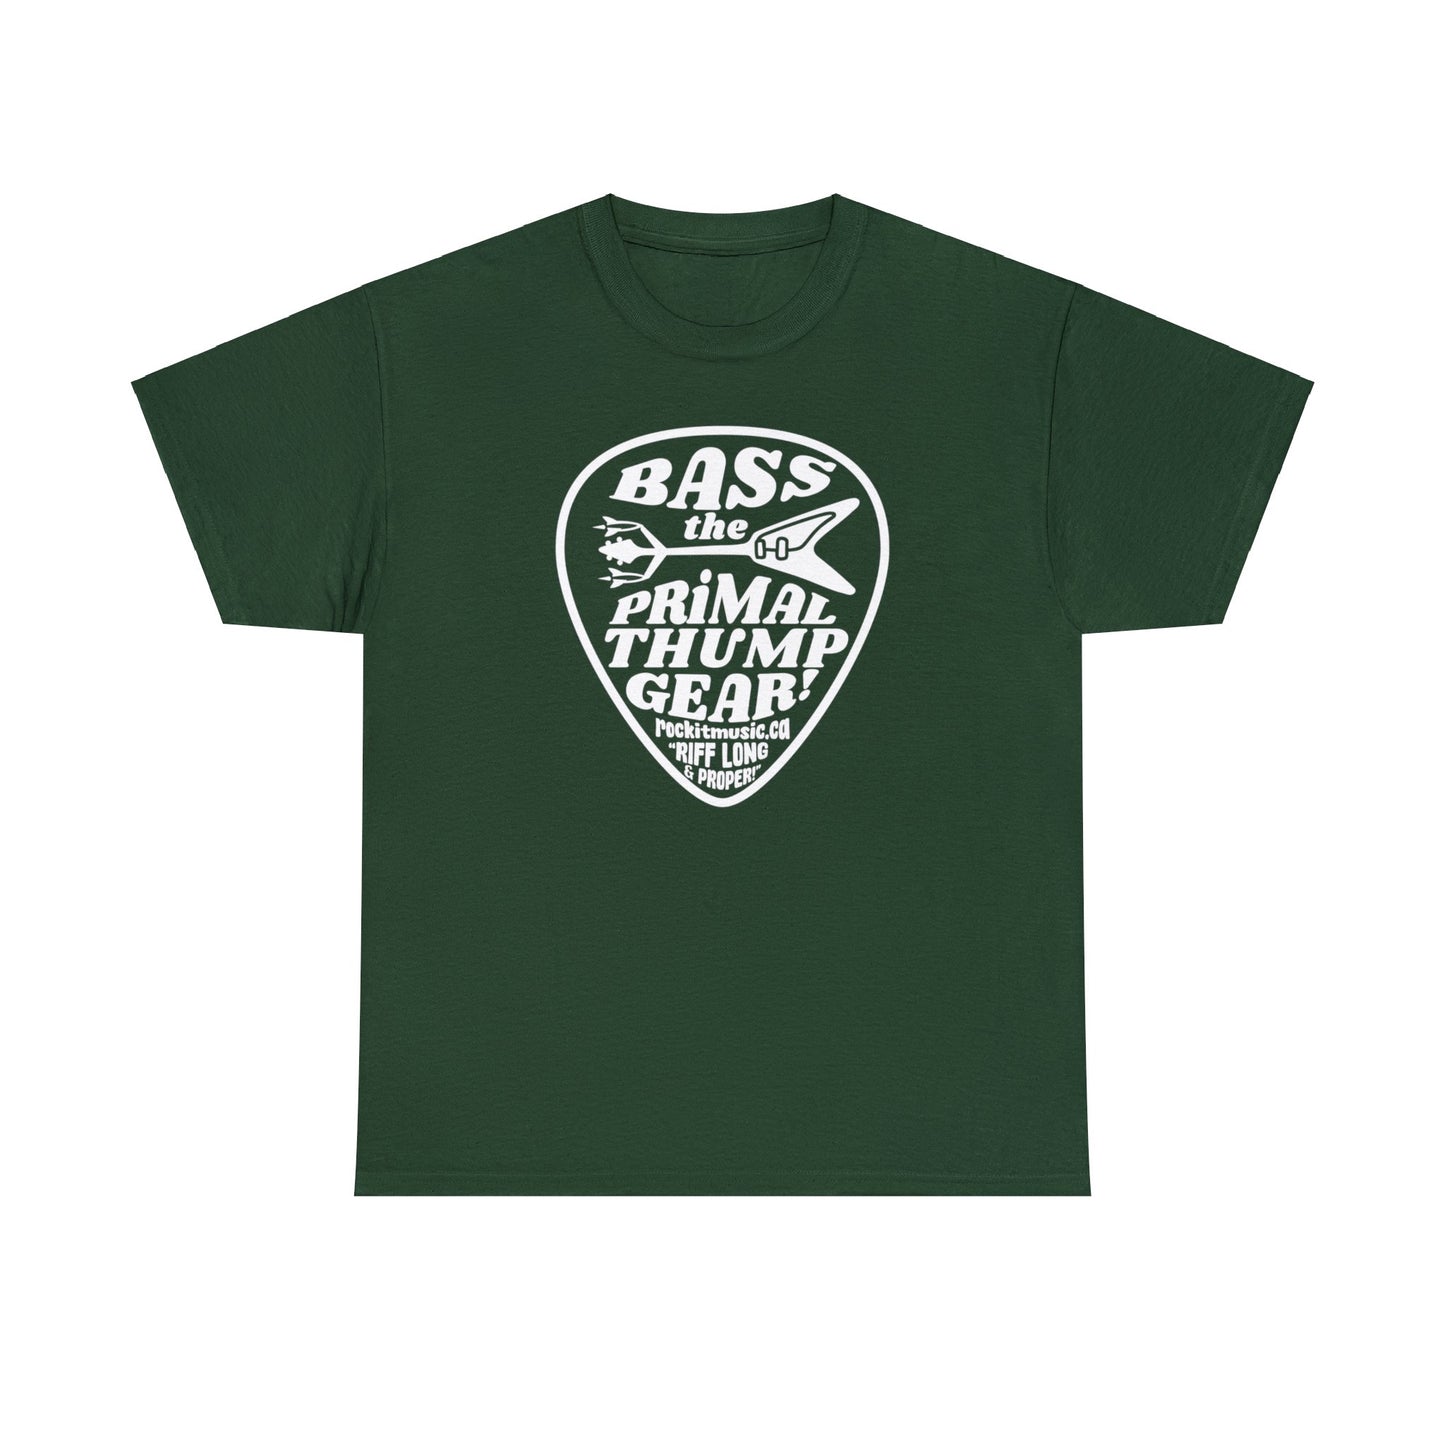 Rockit T-Shirt - Bass The Primal Thump Gear